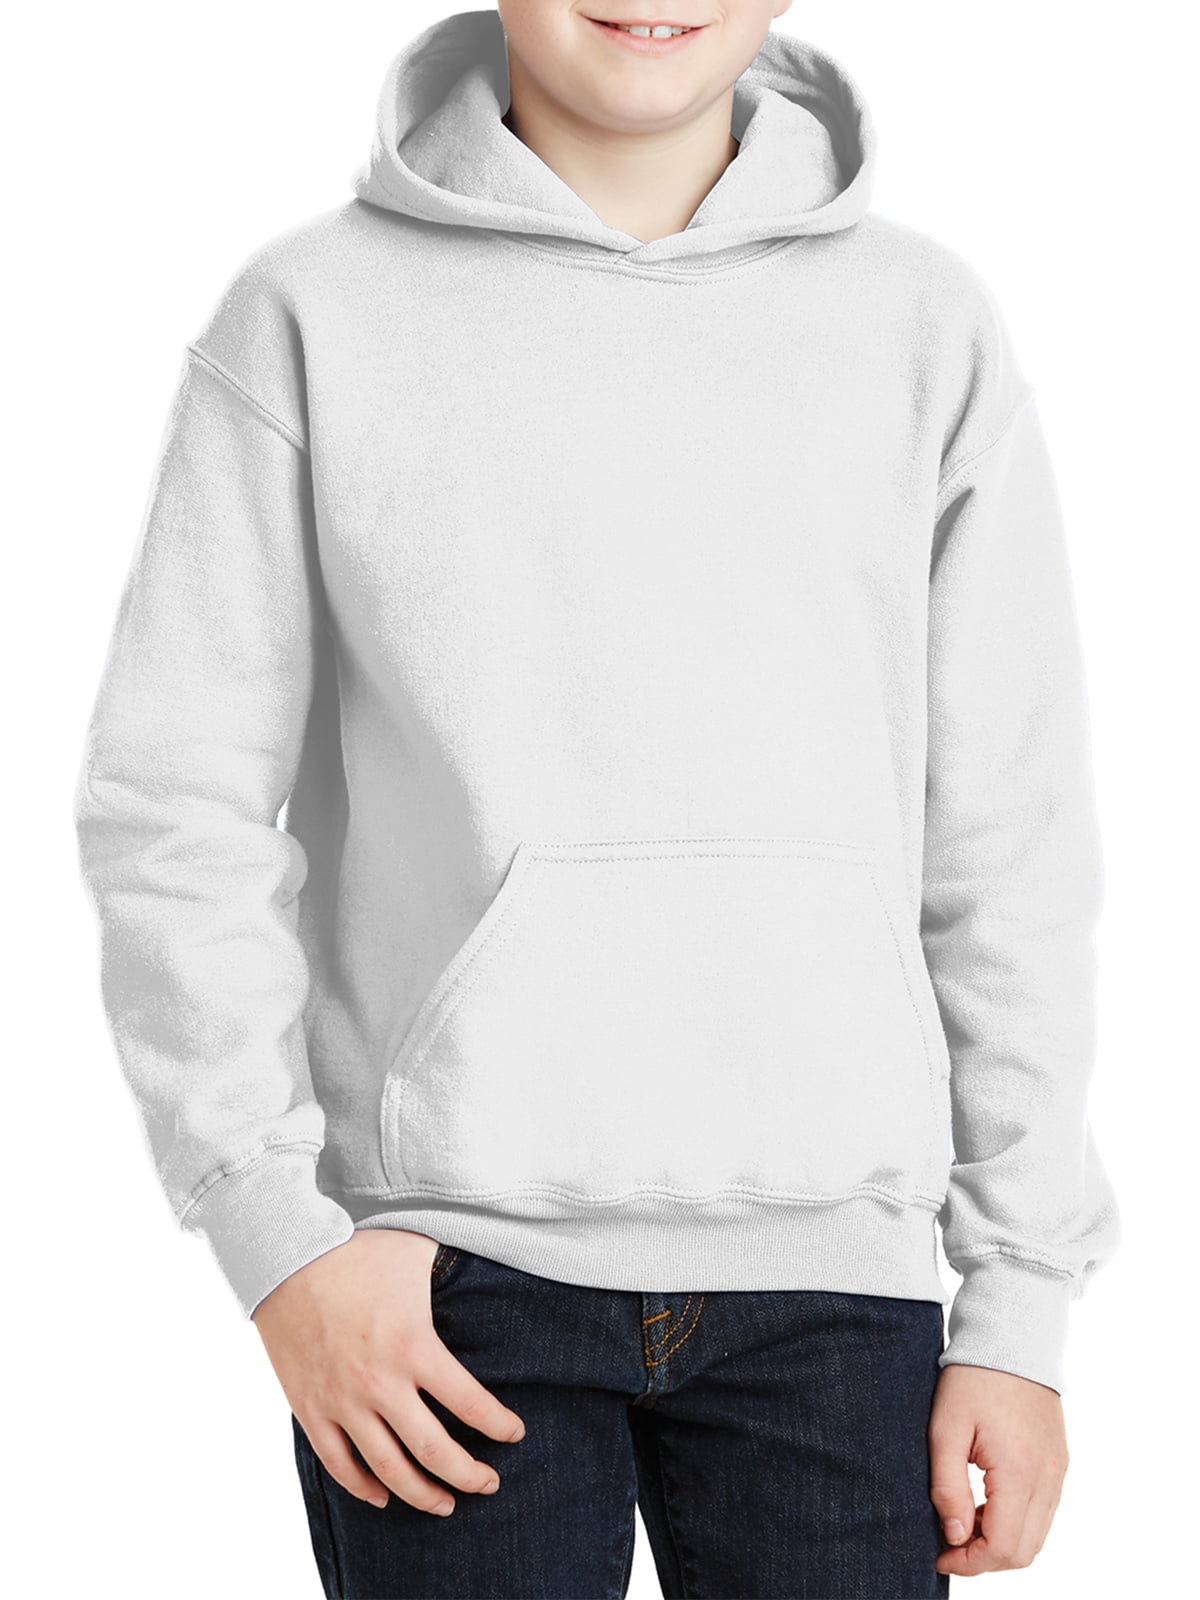 Hanes Comfortblend Pullover hoodie Sweatshirt Unisex YOUTH white XL 18-20 NEW 